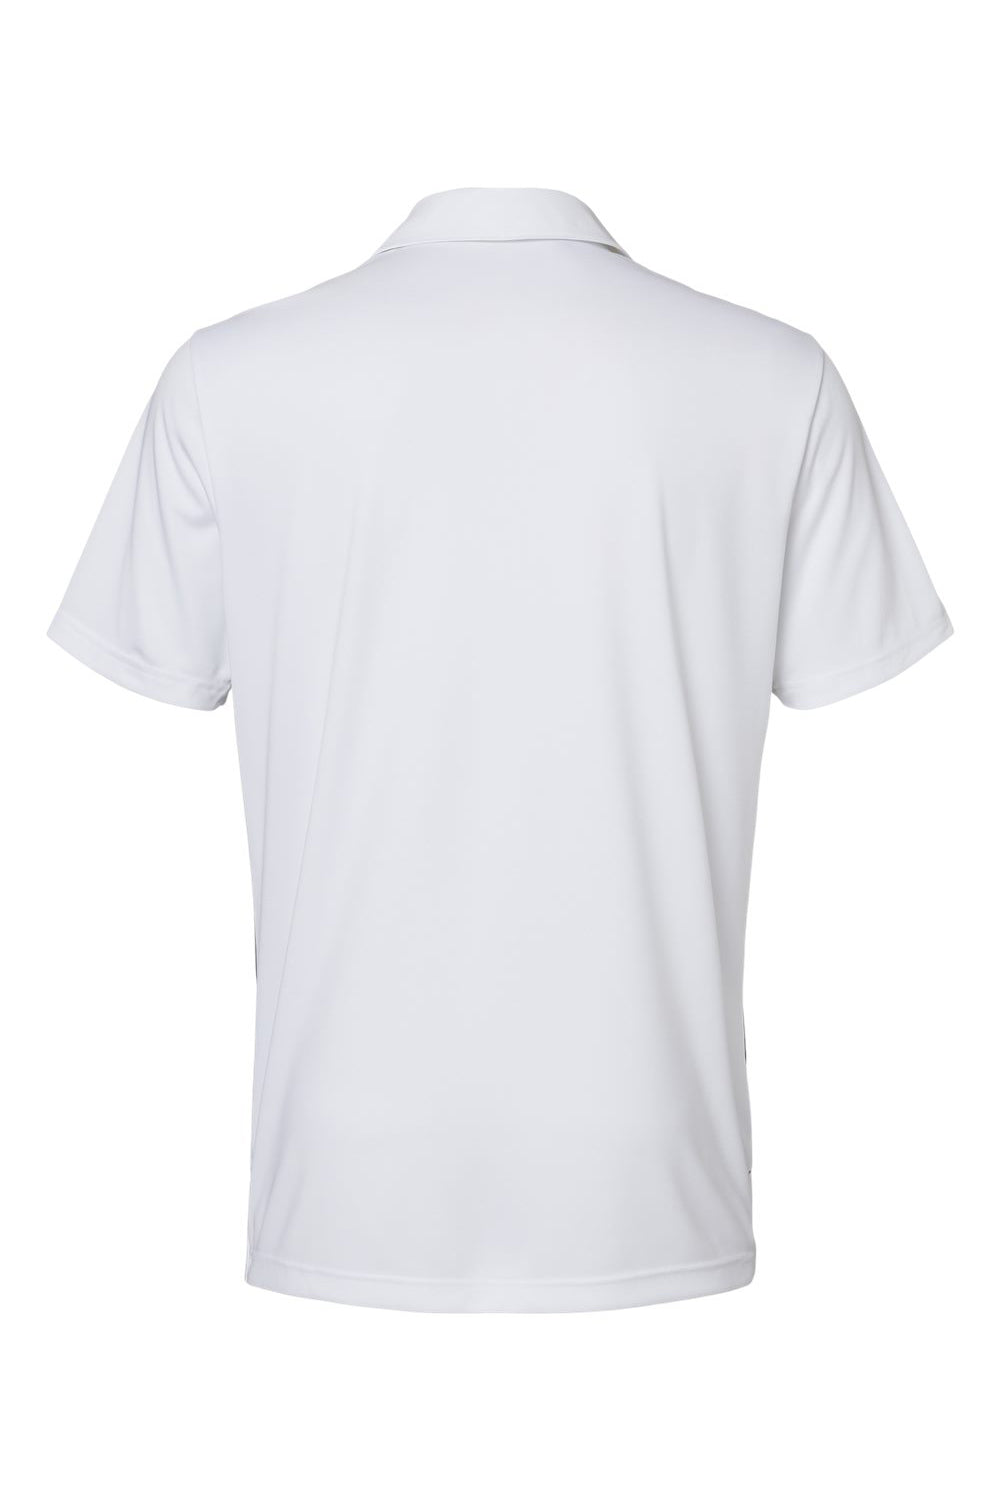 Adidas A236 Mens Merch Block Short Sleeve Polo Shirt White/Grey Flat Back